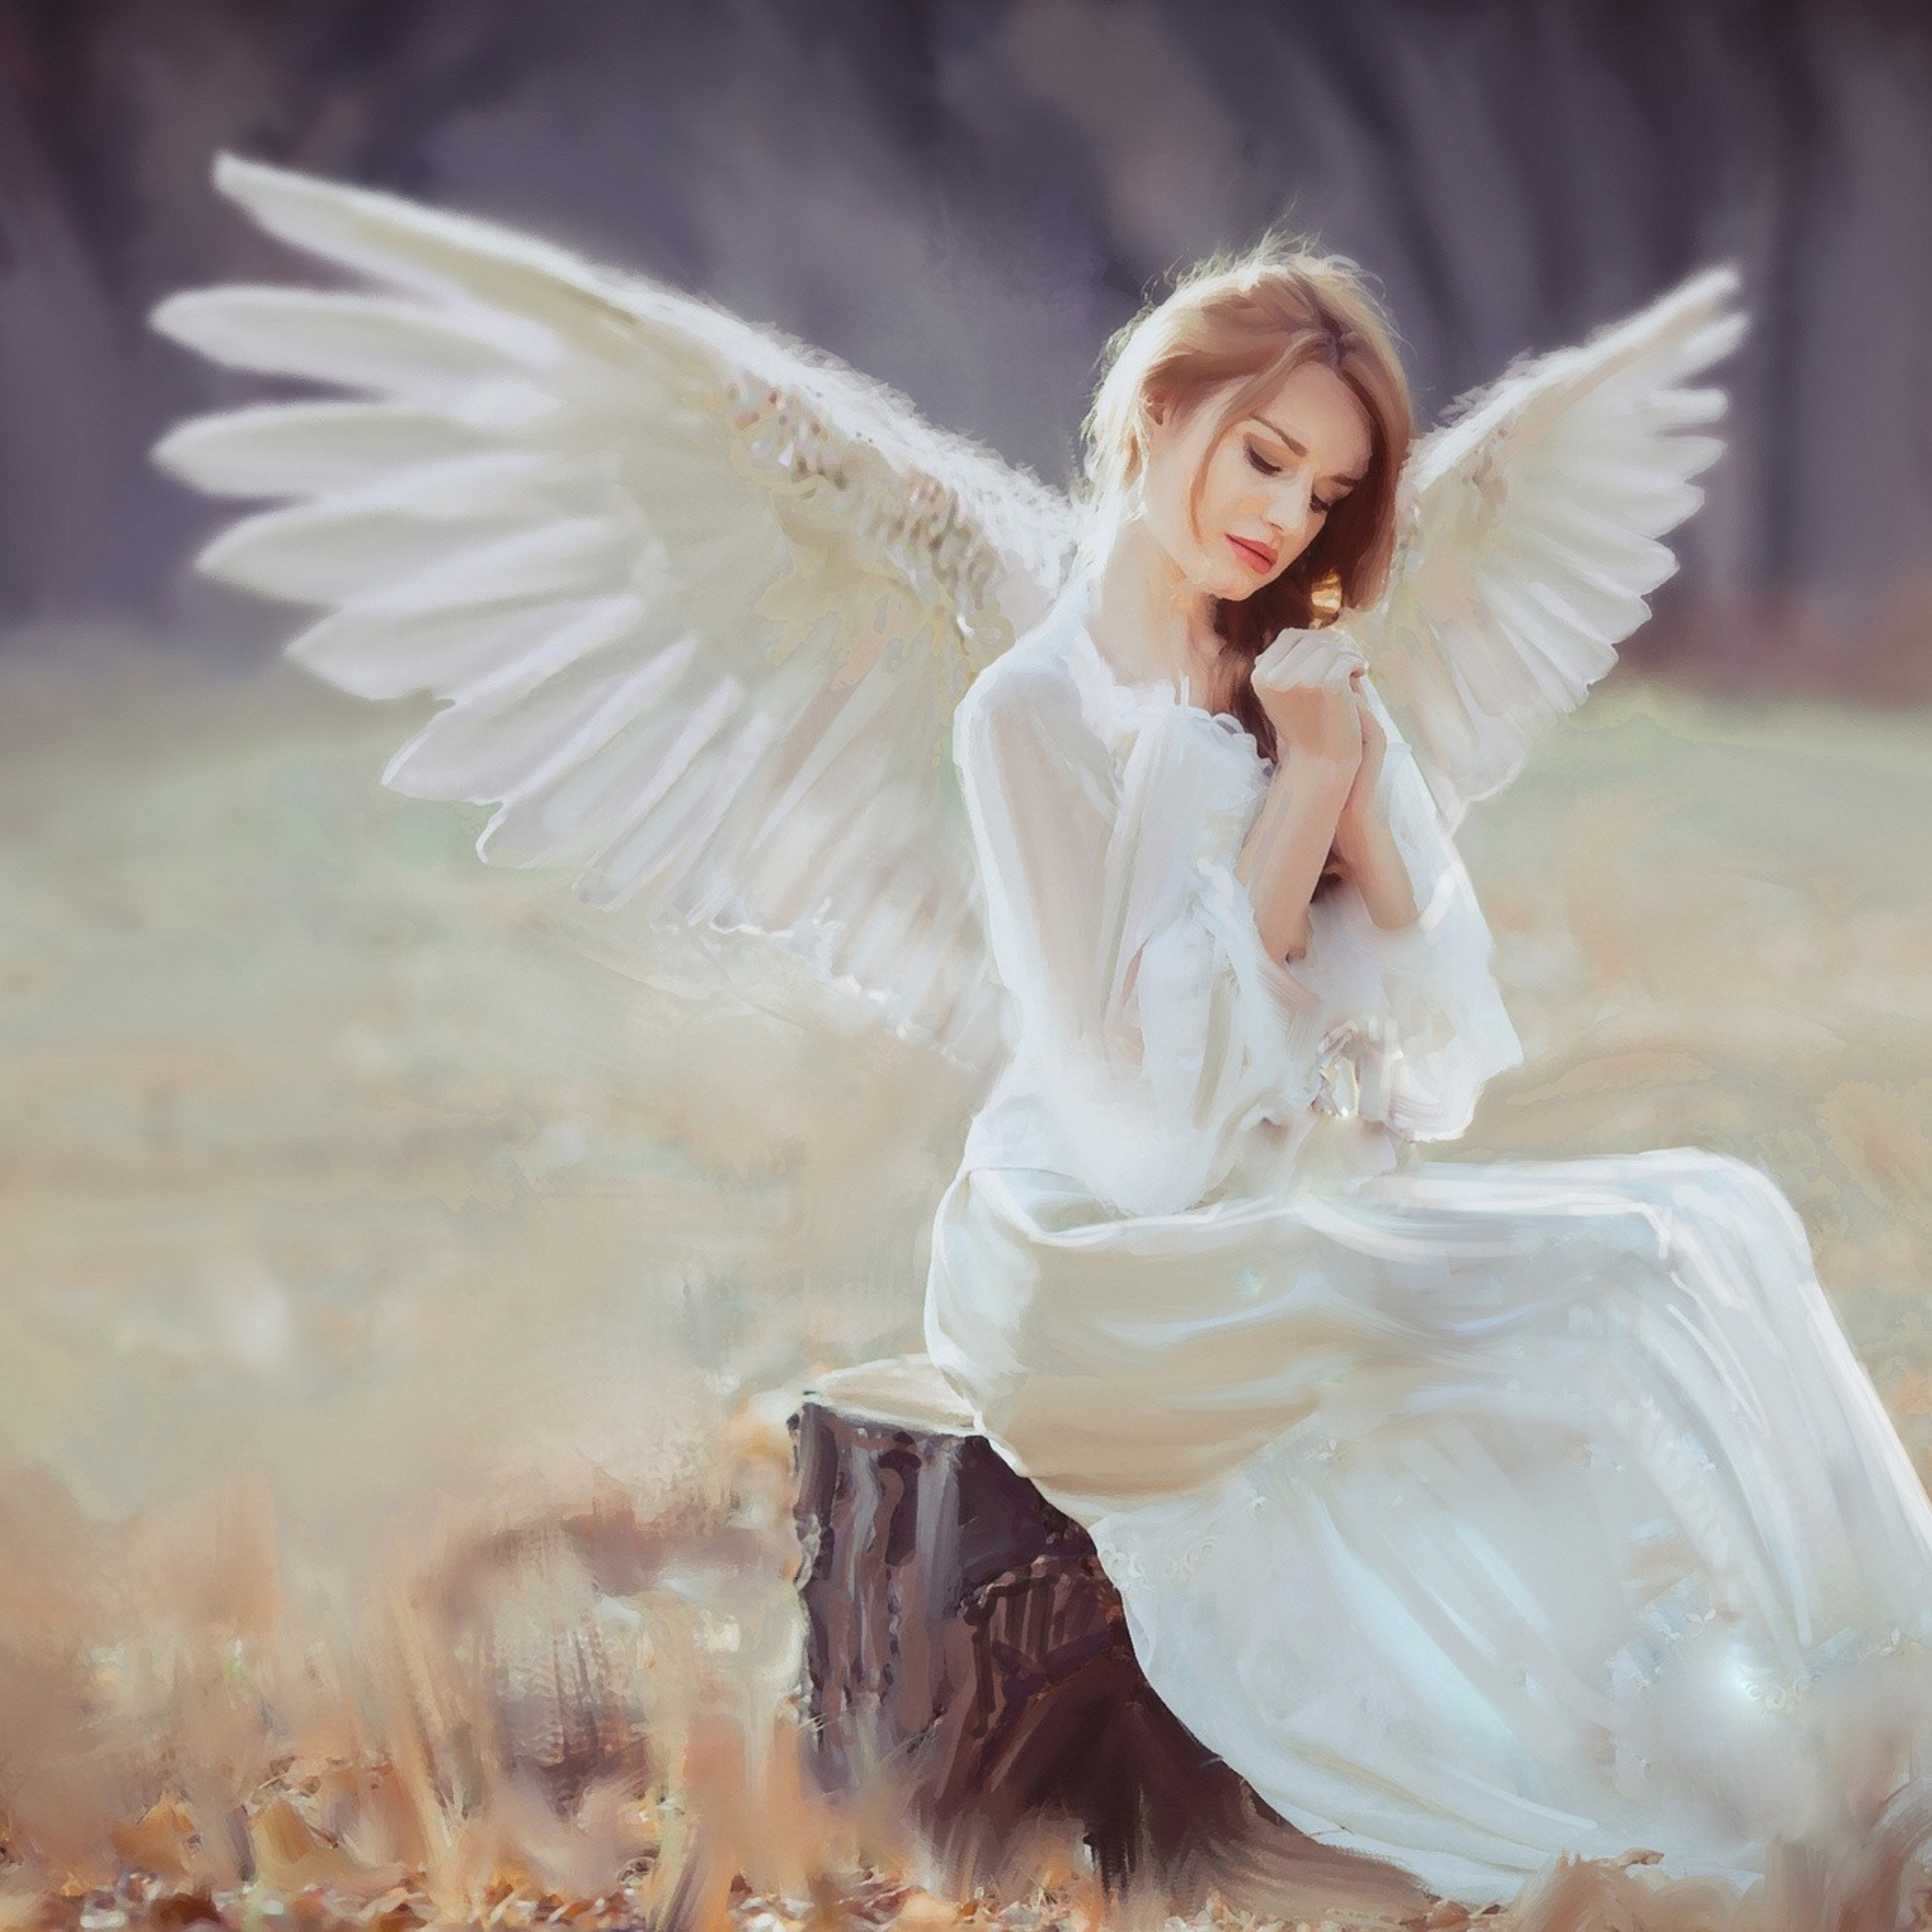 Angel s love. Angels Lullaby Хелена. Девушка с крыльями. Девушка - ангел. Дева-ангел.